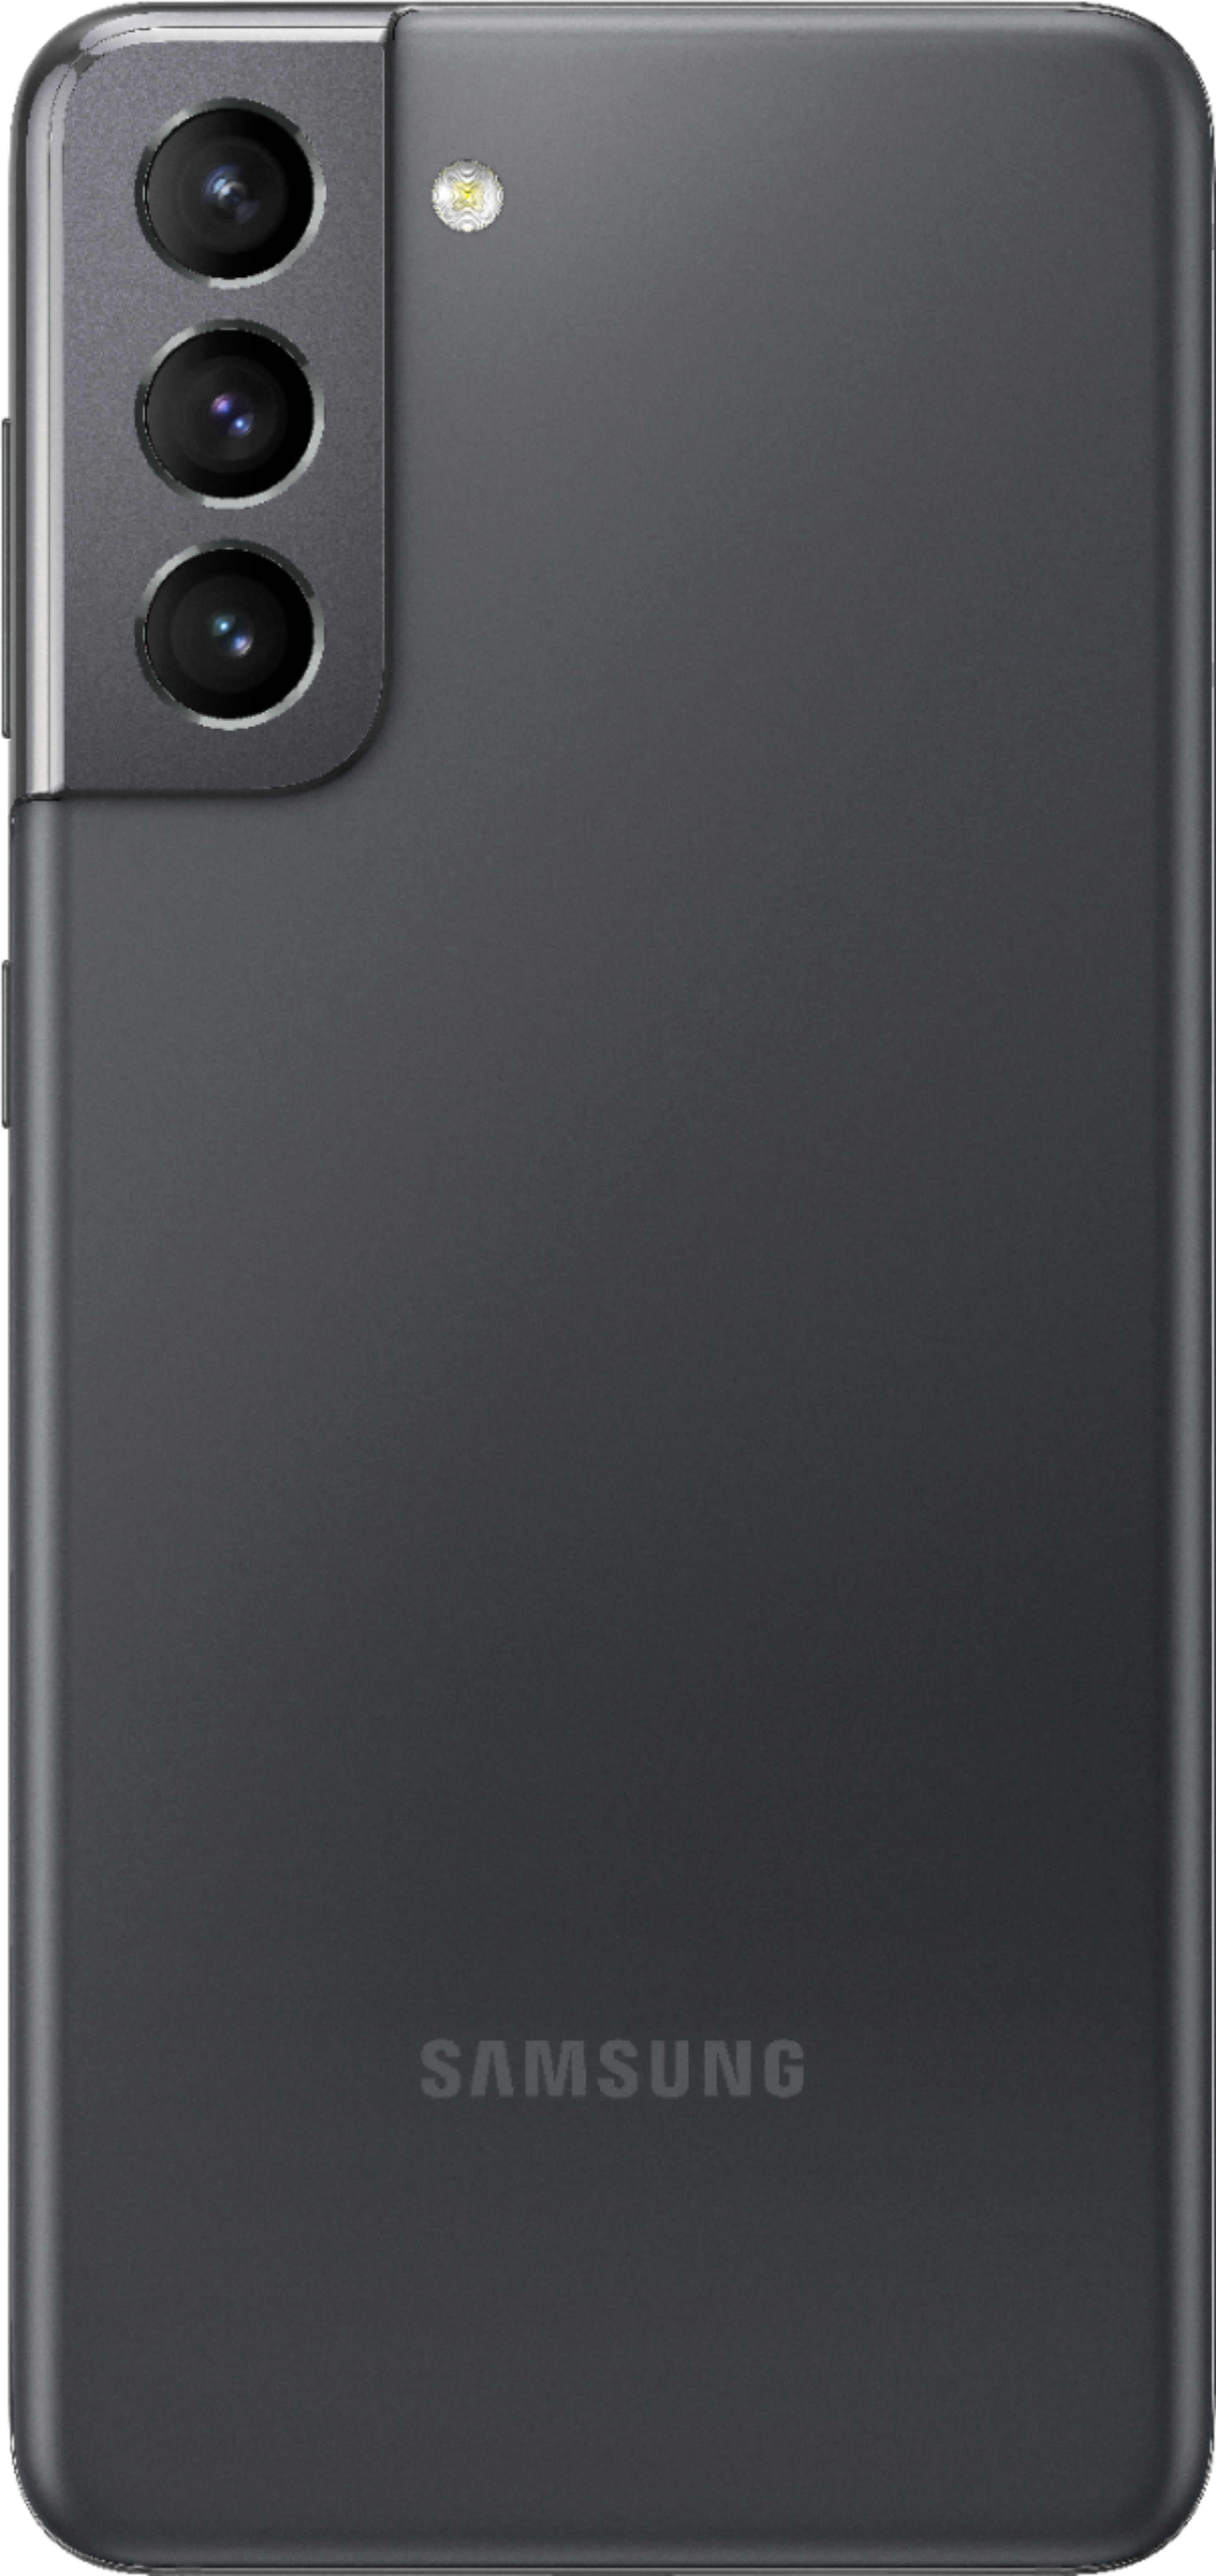 Samsung Galaxy S21 5g 256gb Unlocked Phantom Gray Sm G991uzaexaa Best Buy